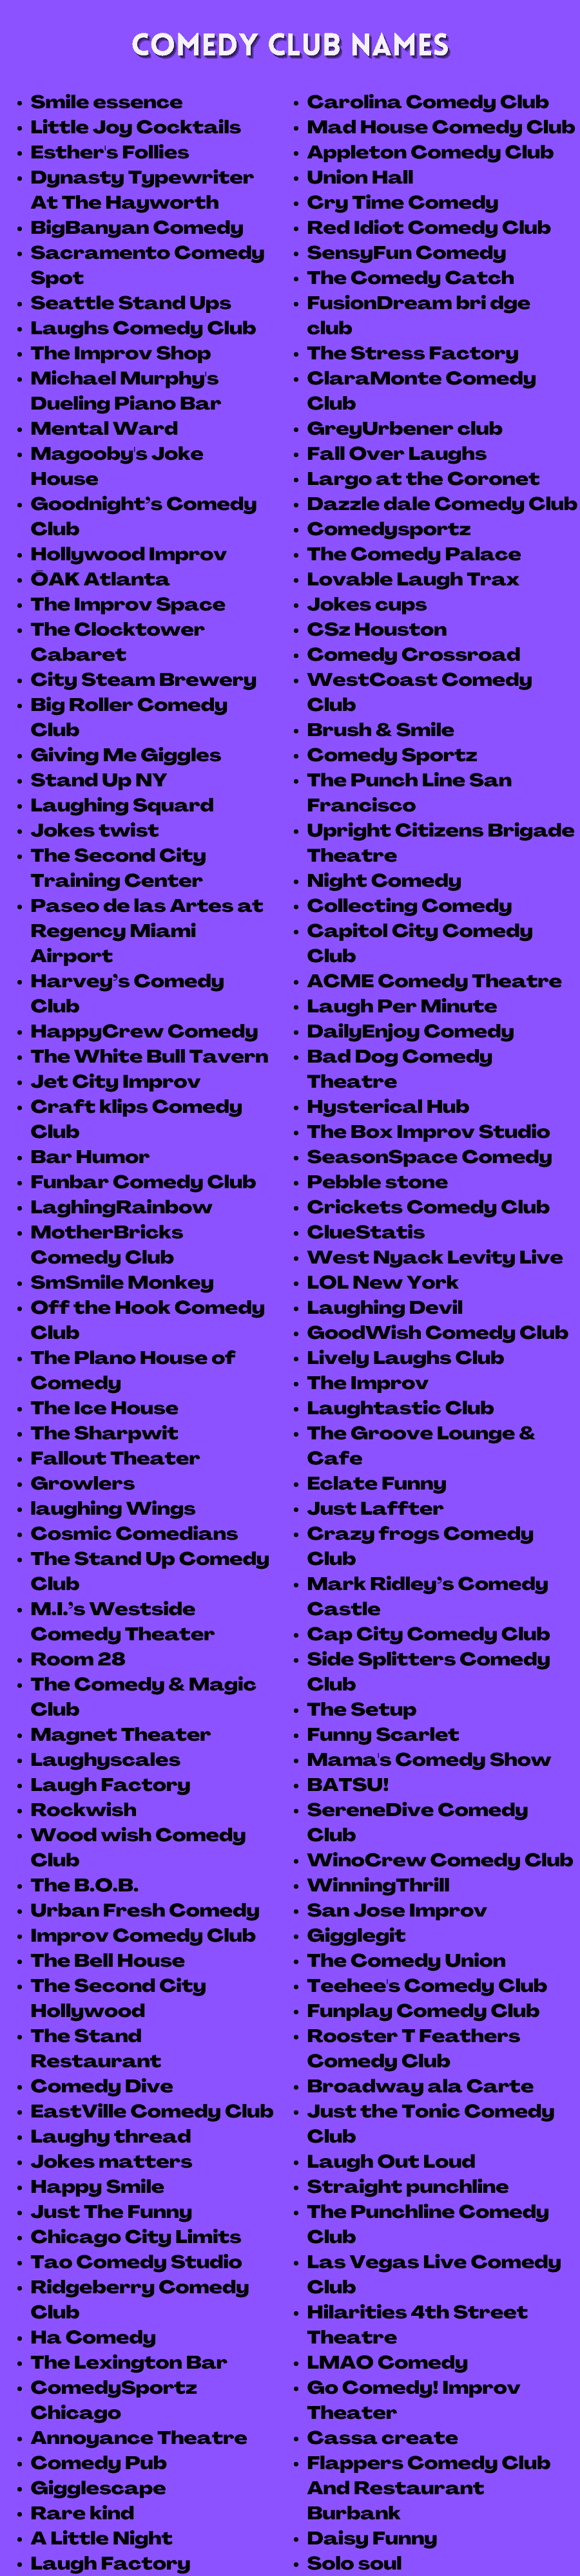 Comedy Club Names